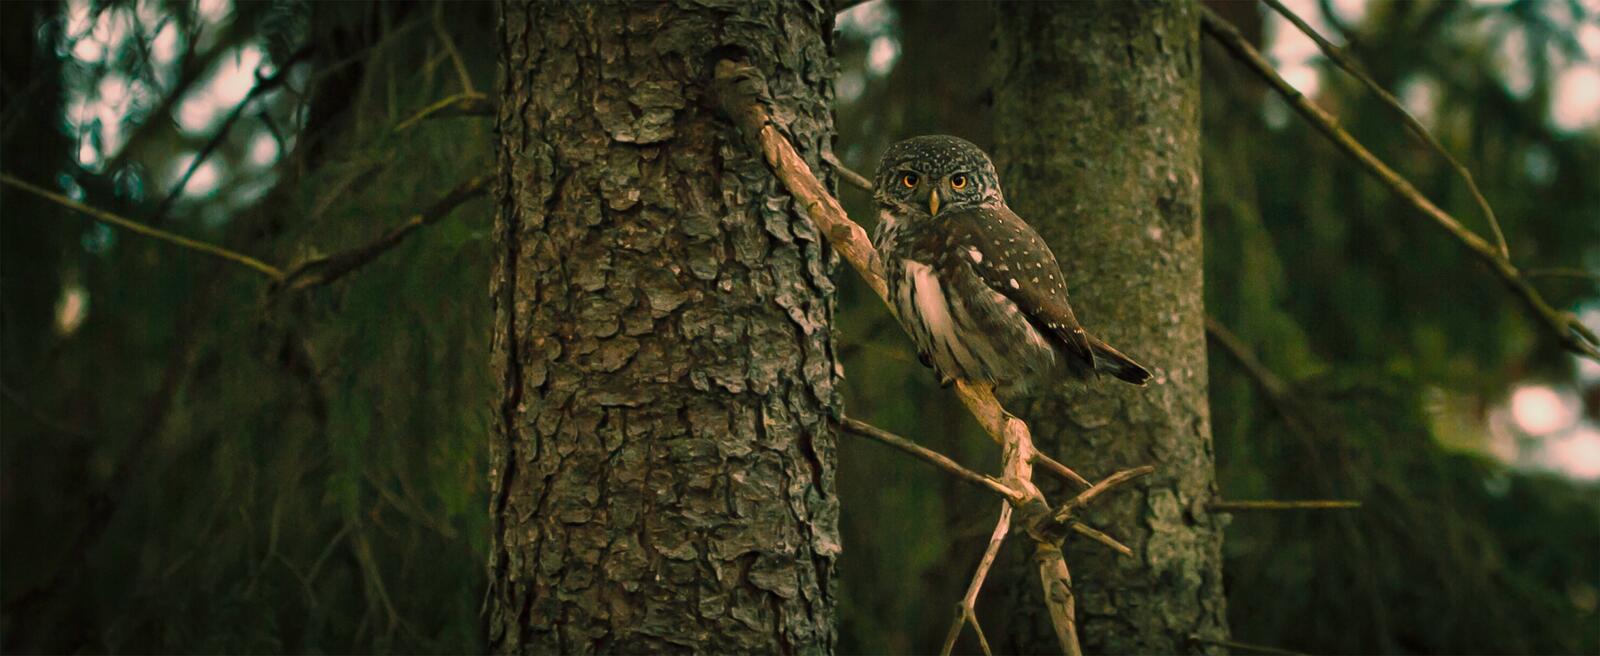 Бесплатное фото Клевая сова сидит на ветке дерева